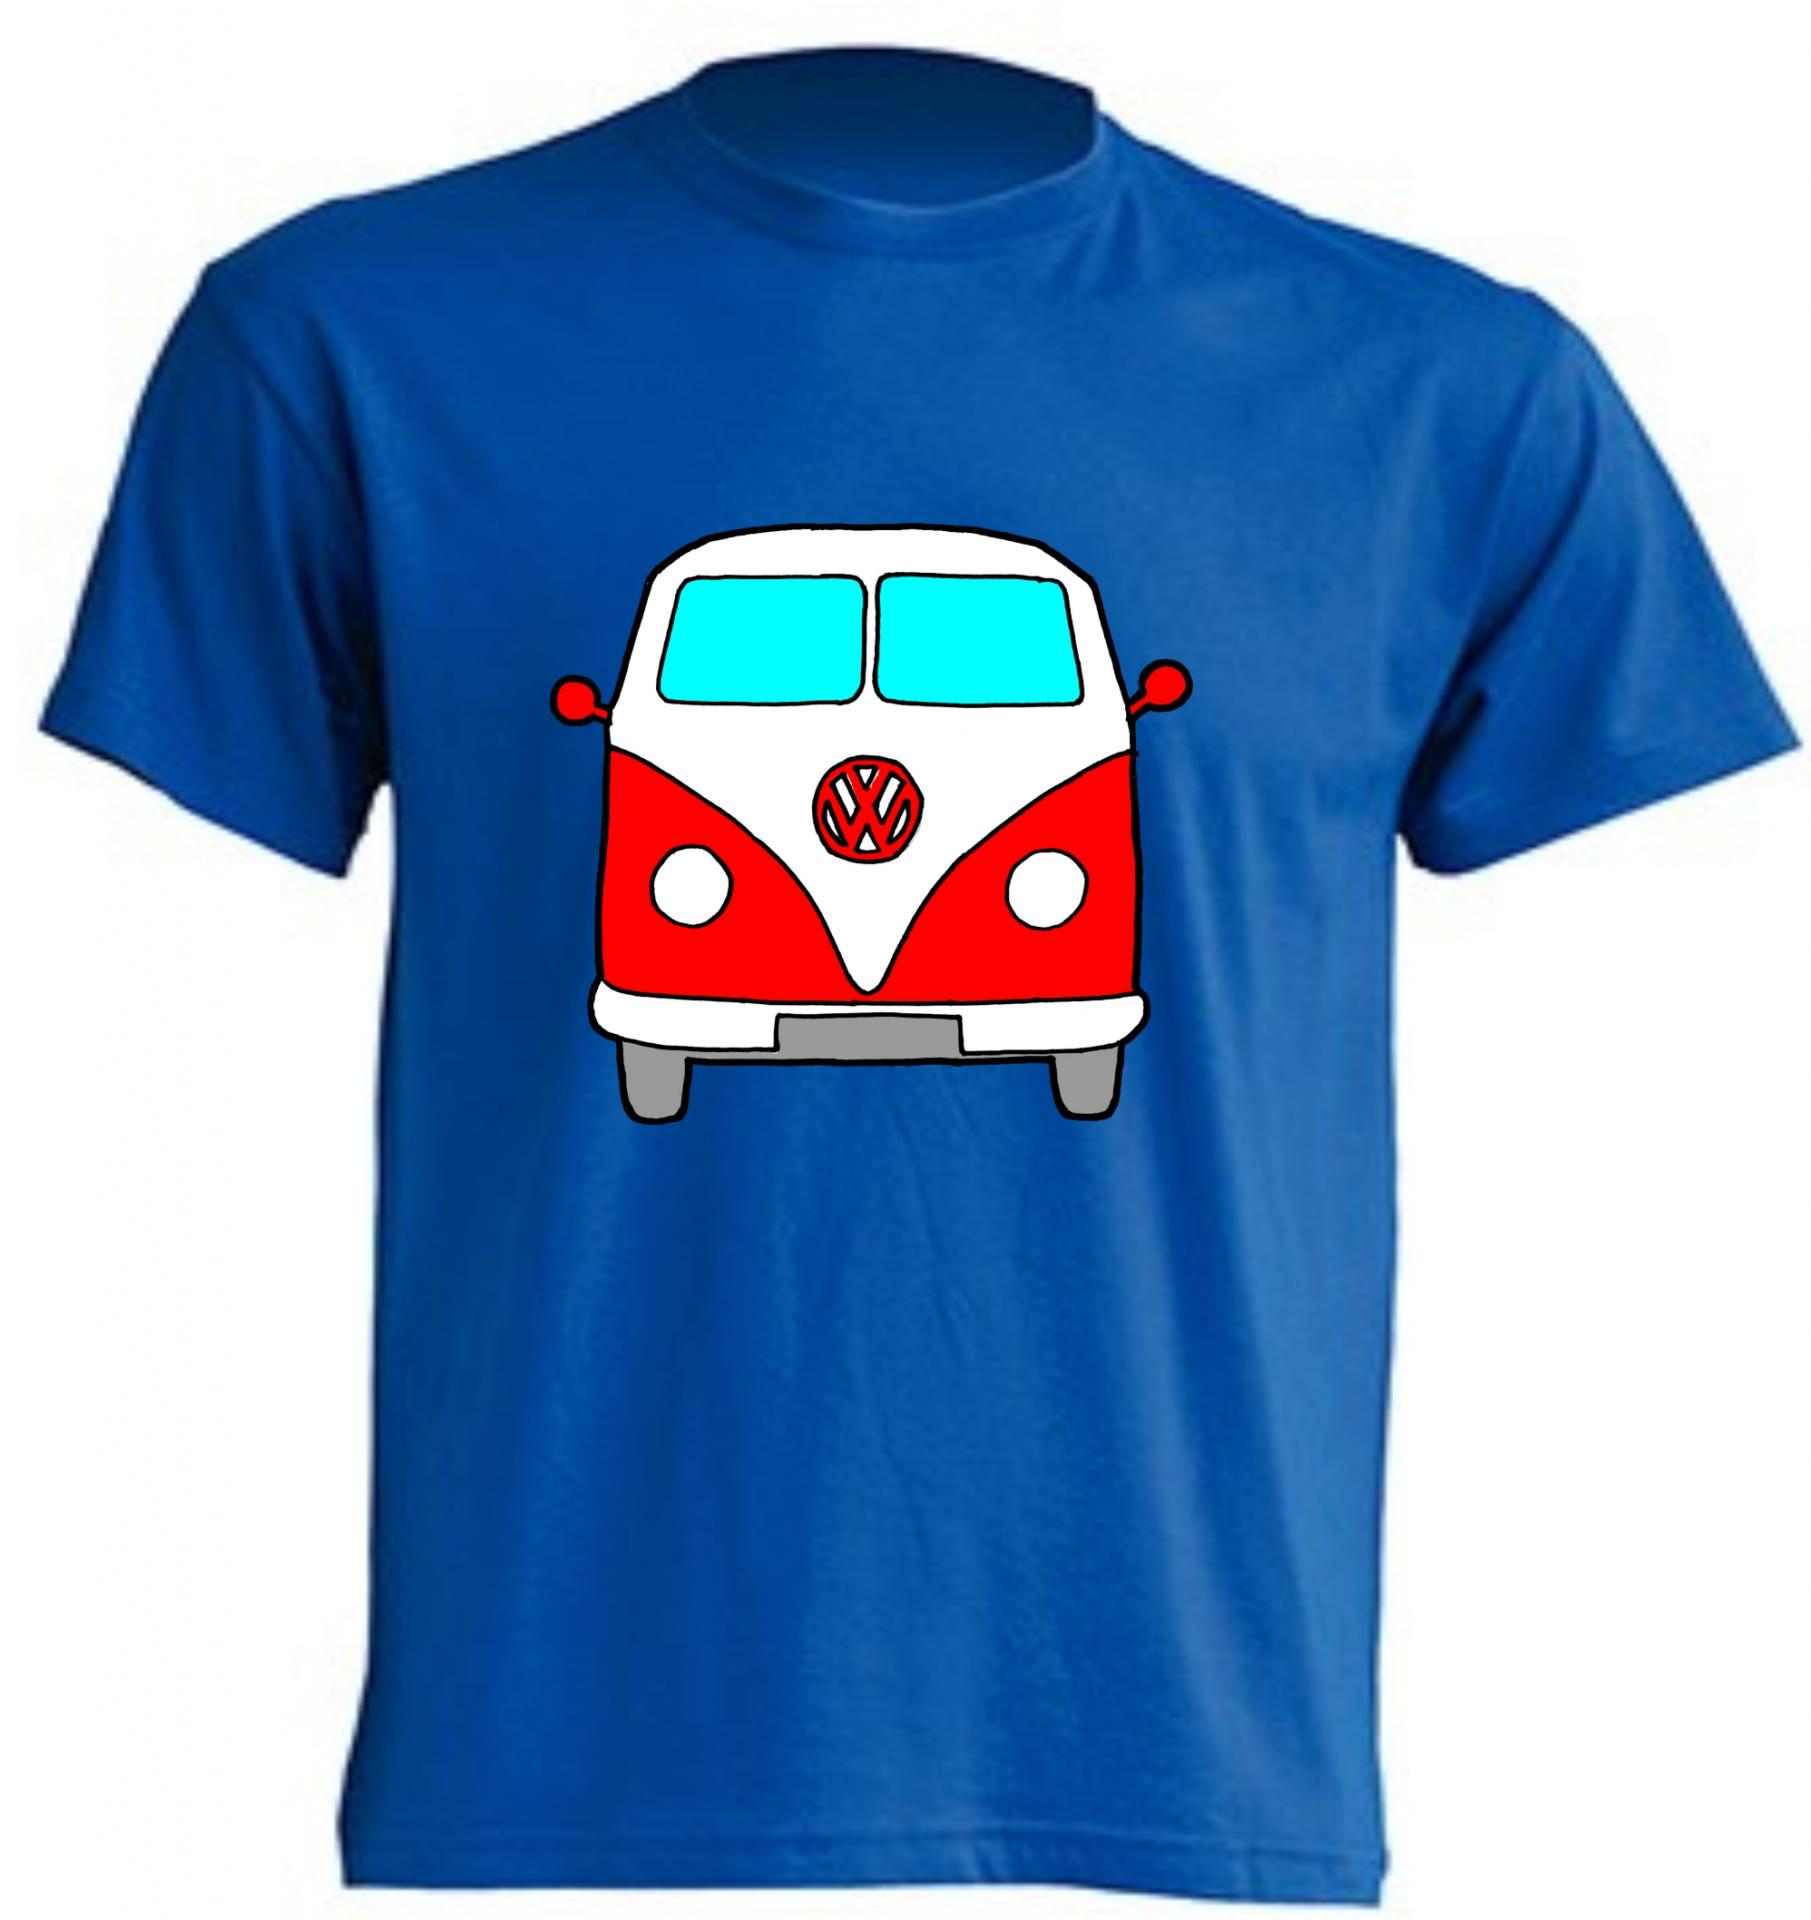 Camiseta VW VAN